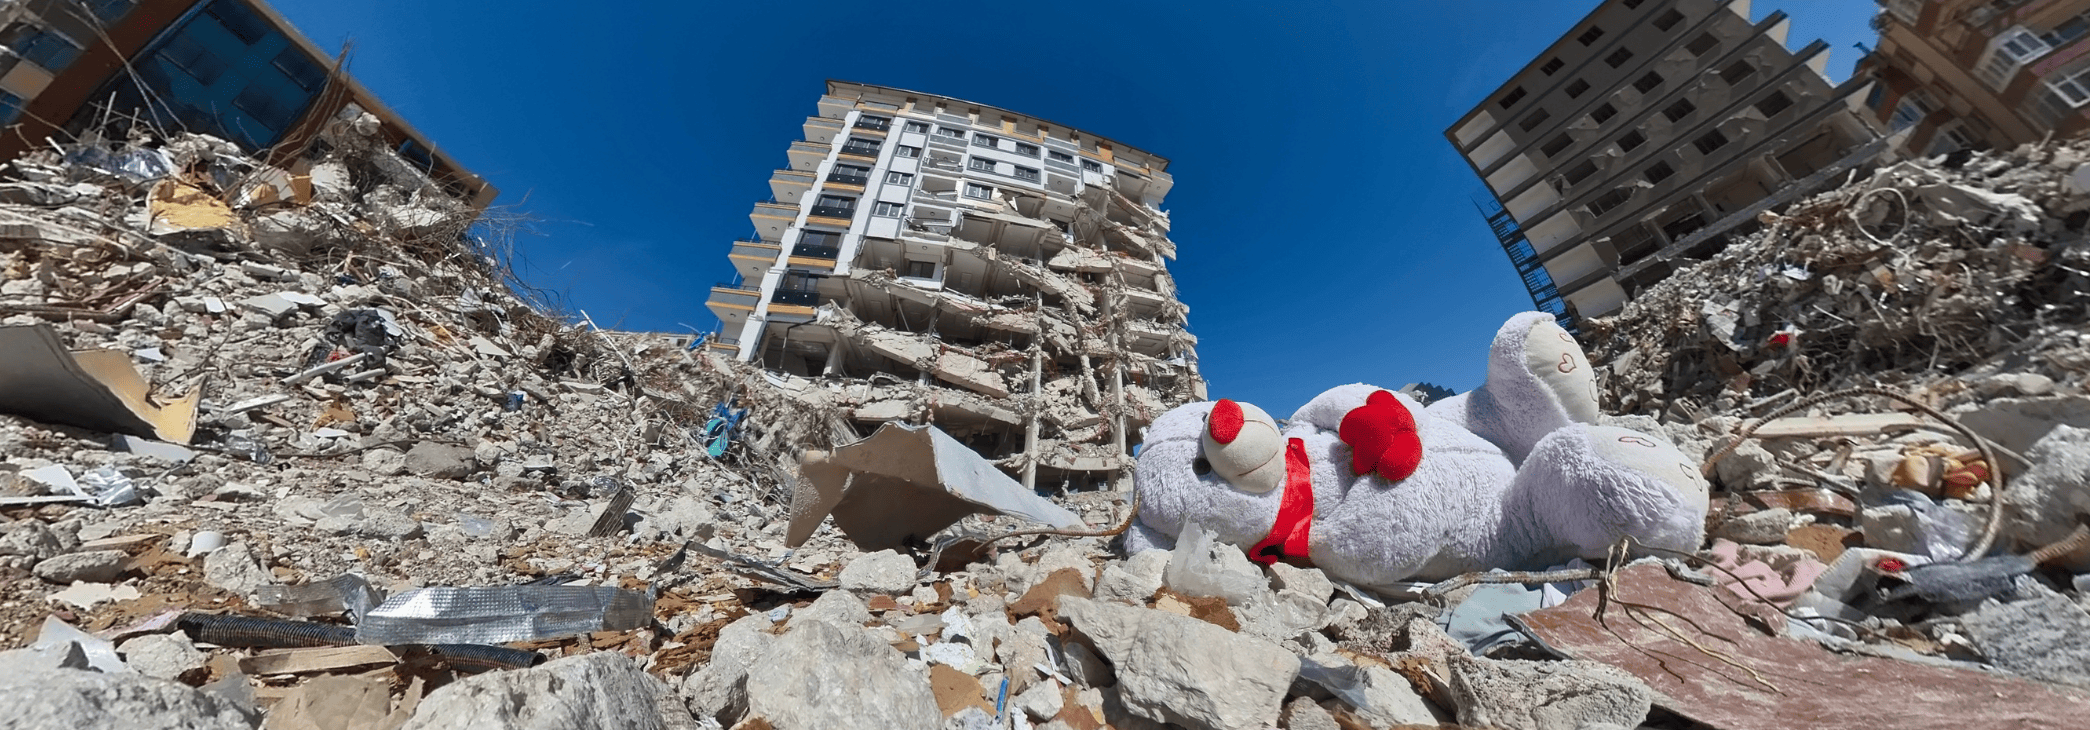 Hatay earthquake February 2023 Turkey